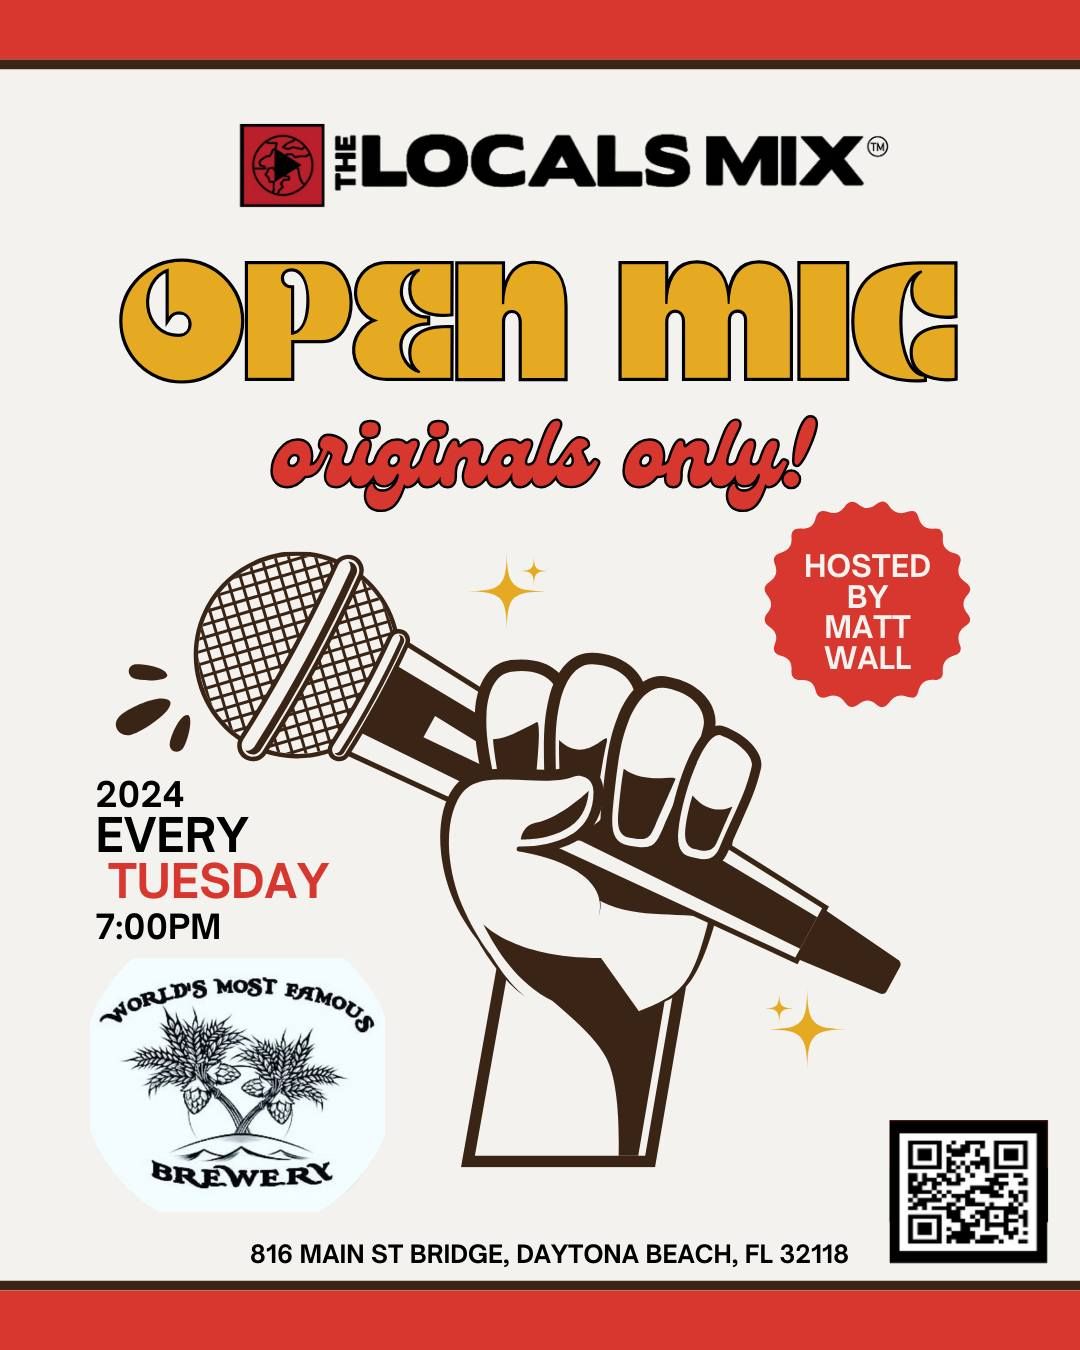 The Locals Mix Open Mic Originals Only! 